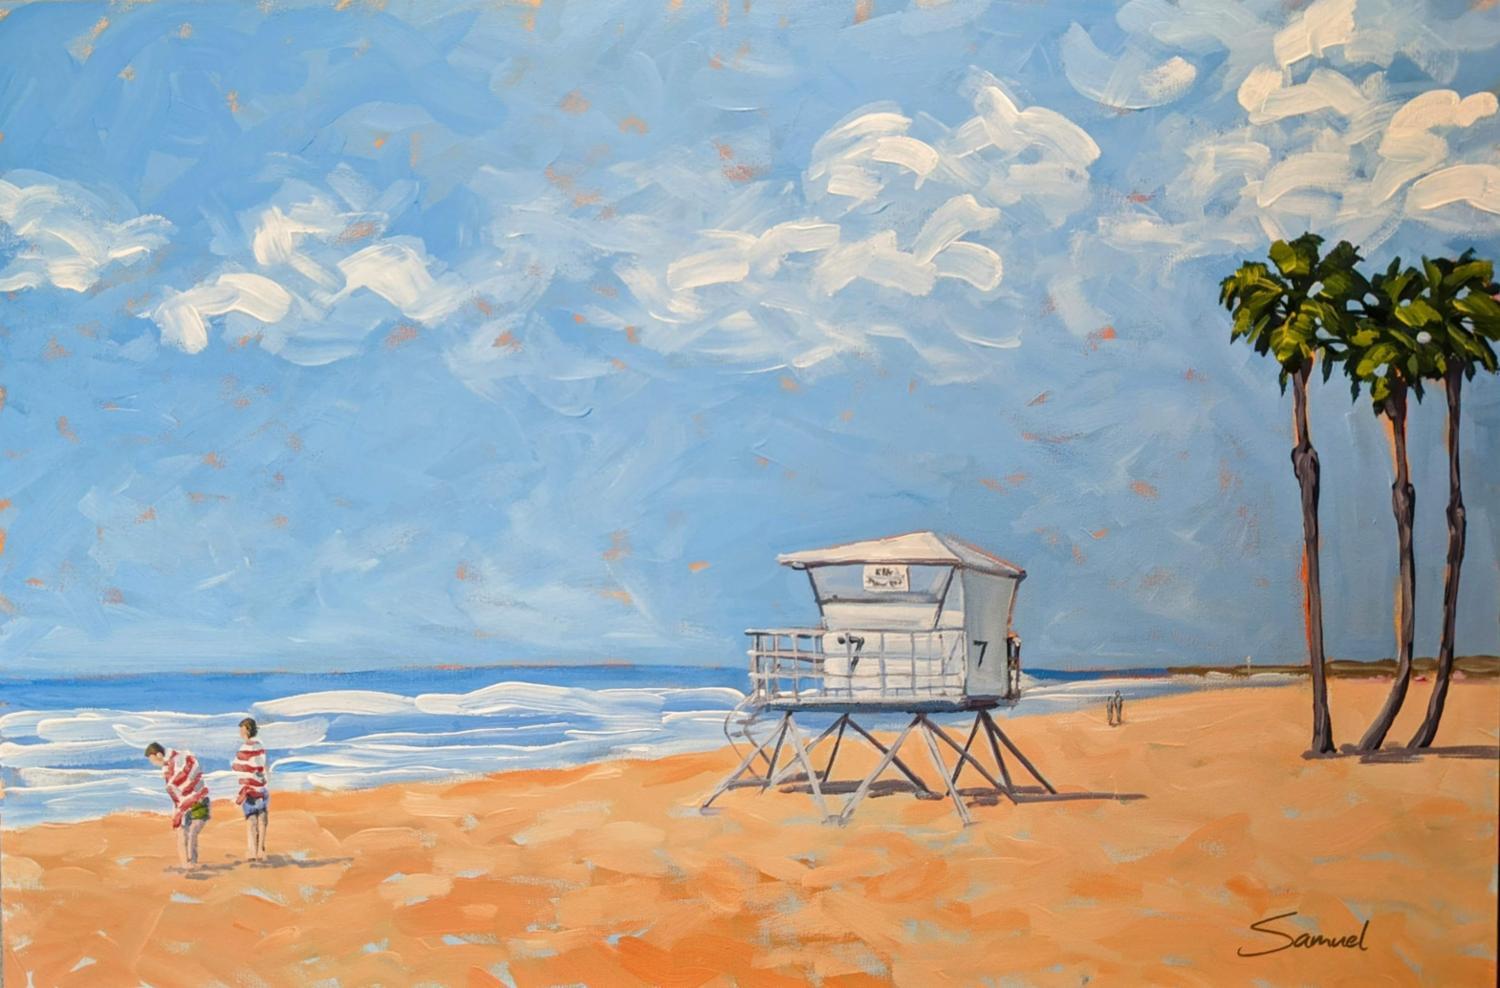 Samuel Pretorius Landscape Painting - Lifeguard Tower and Beachgoers, Original Painting